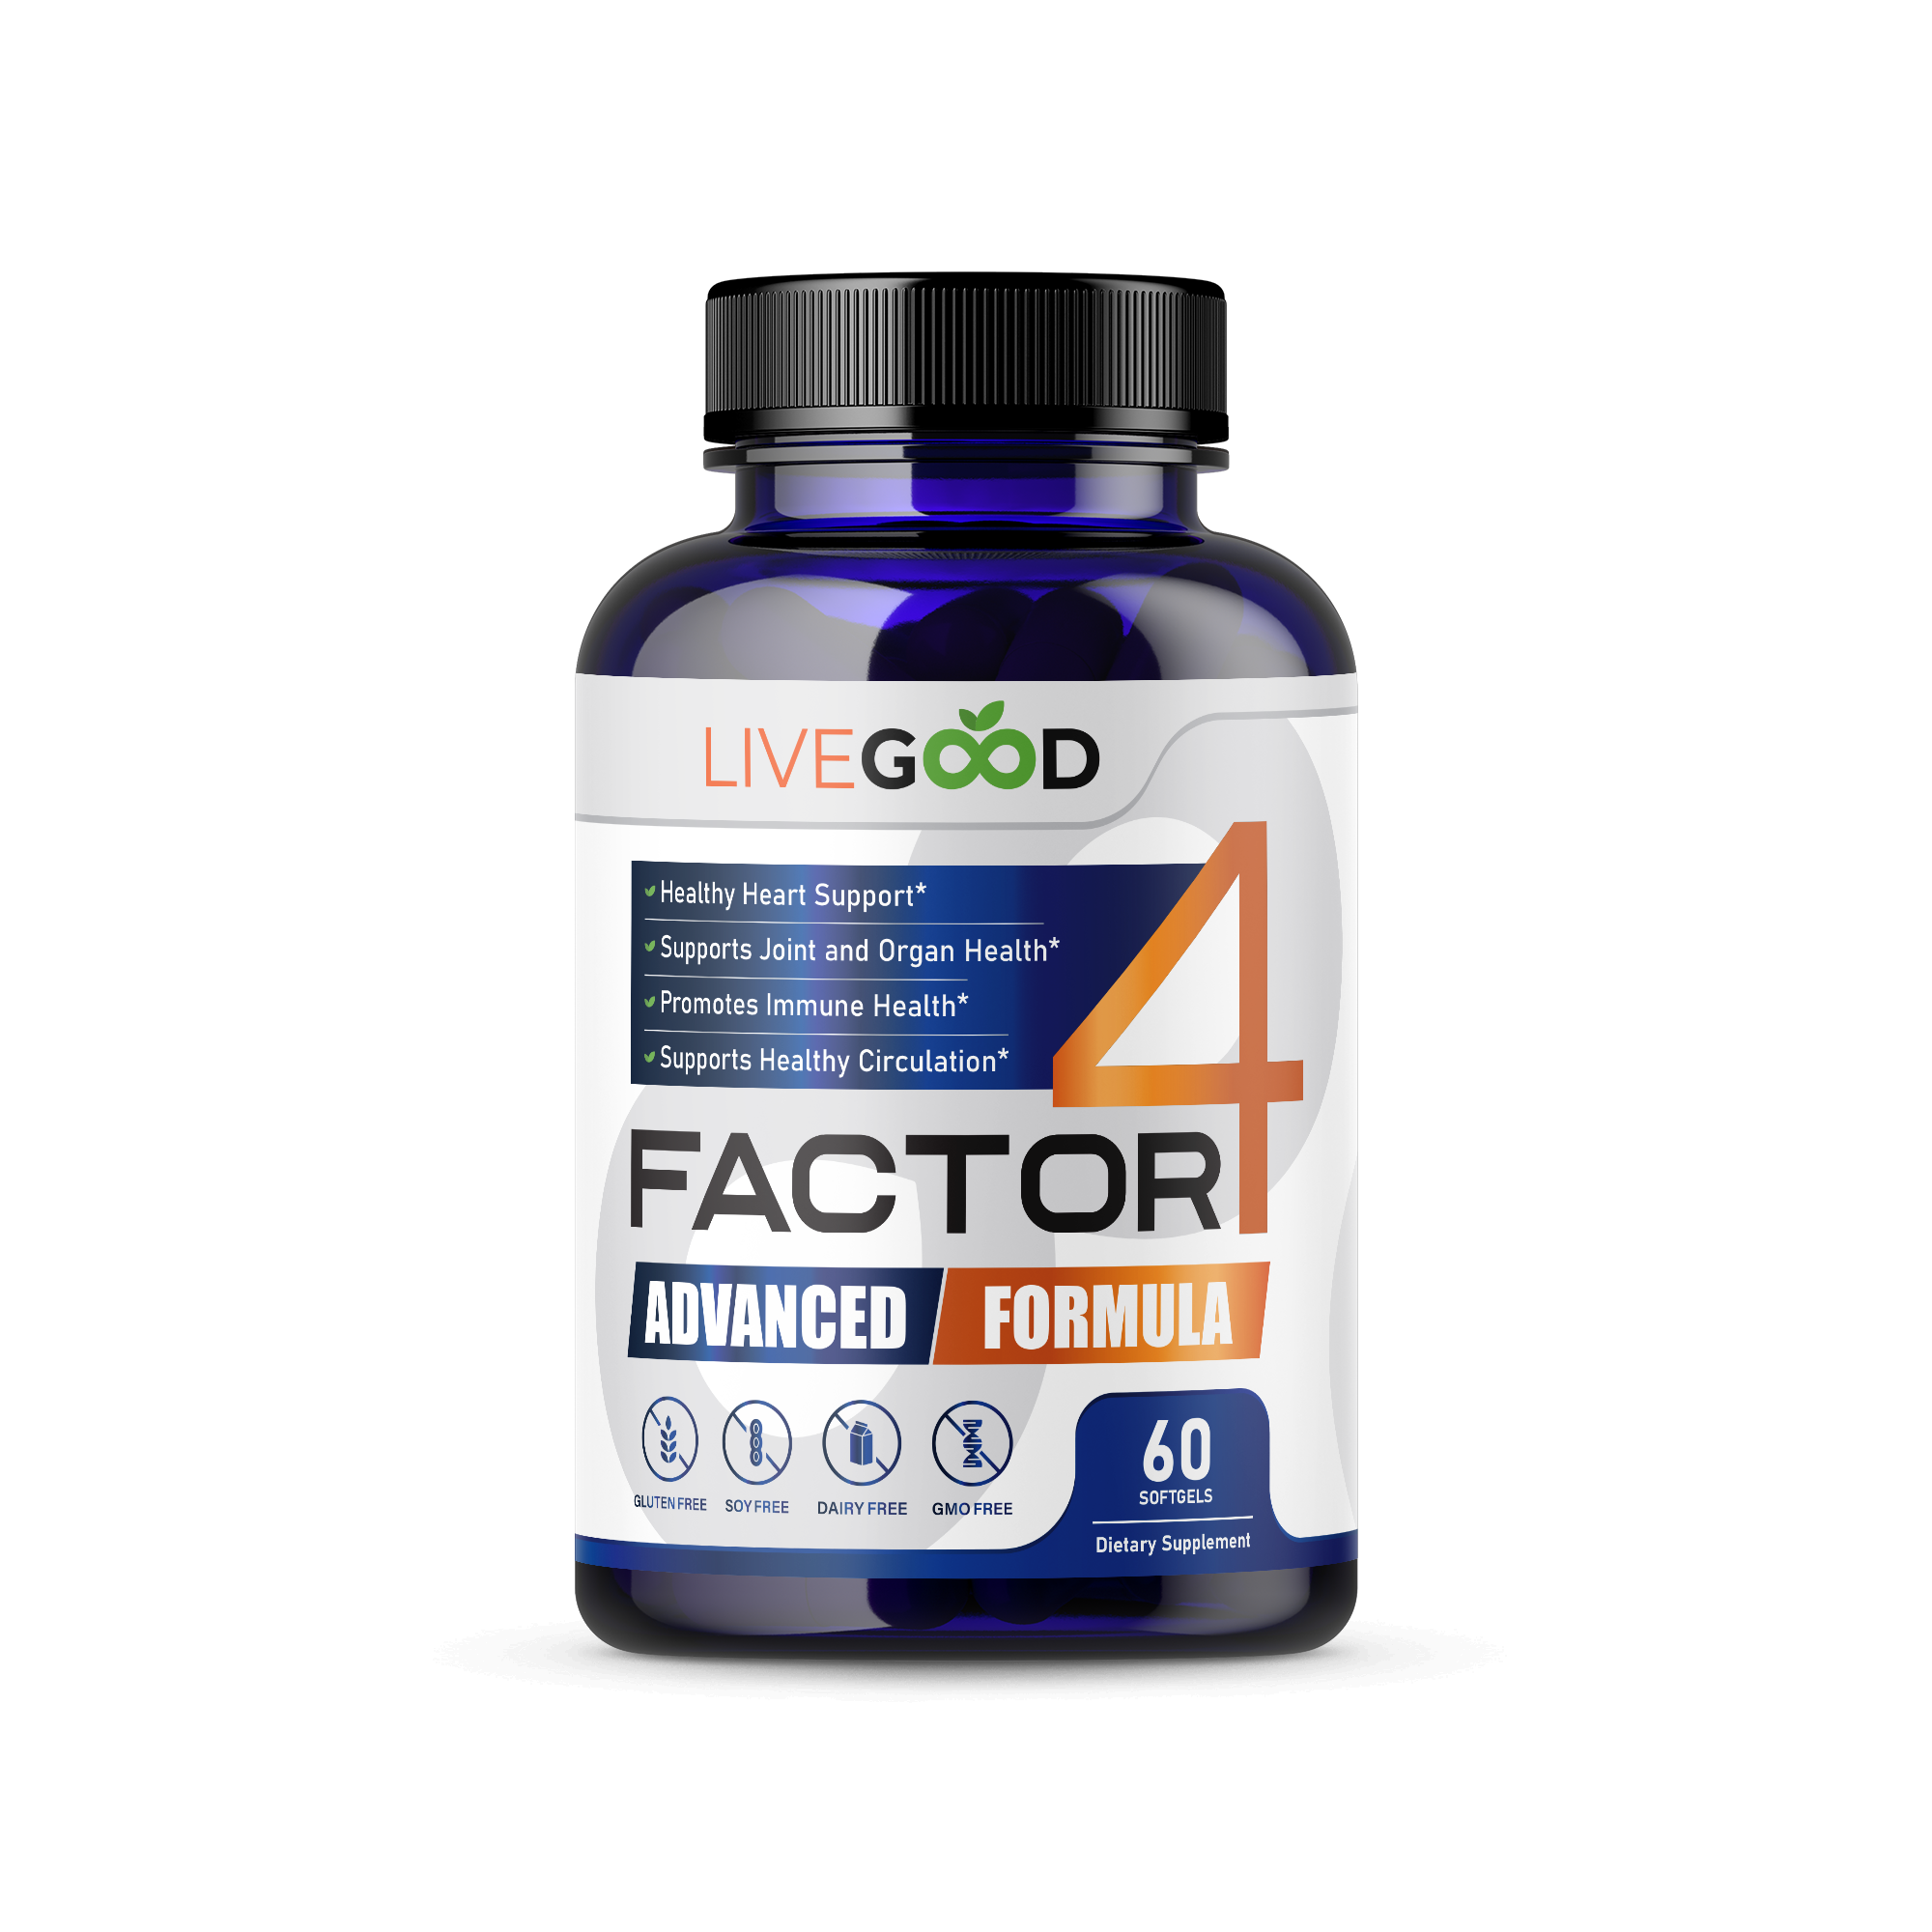 LIVEGOOD Factor4 - Advanced Inflammation Management Review